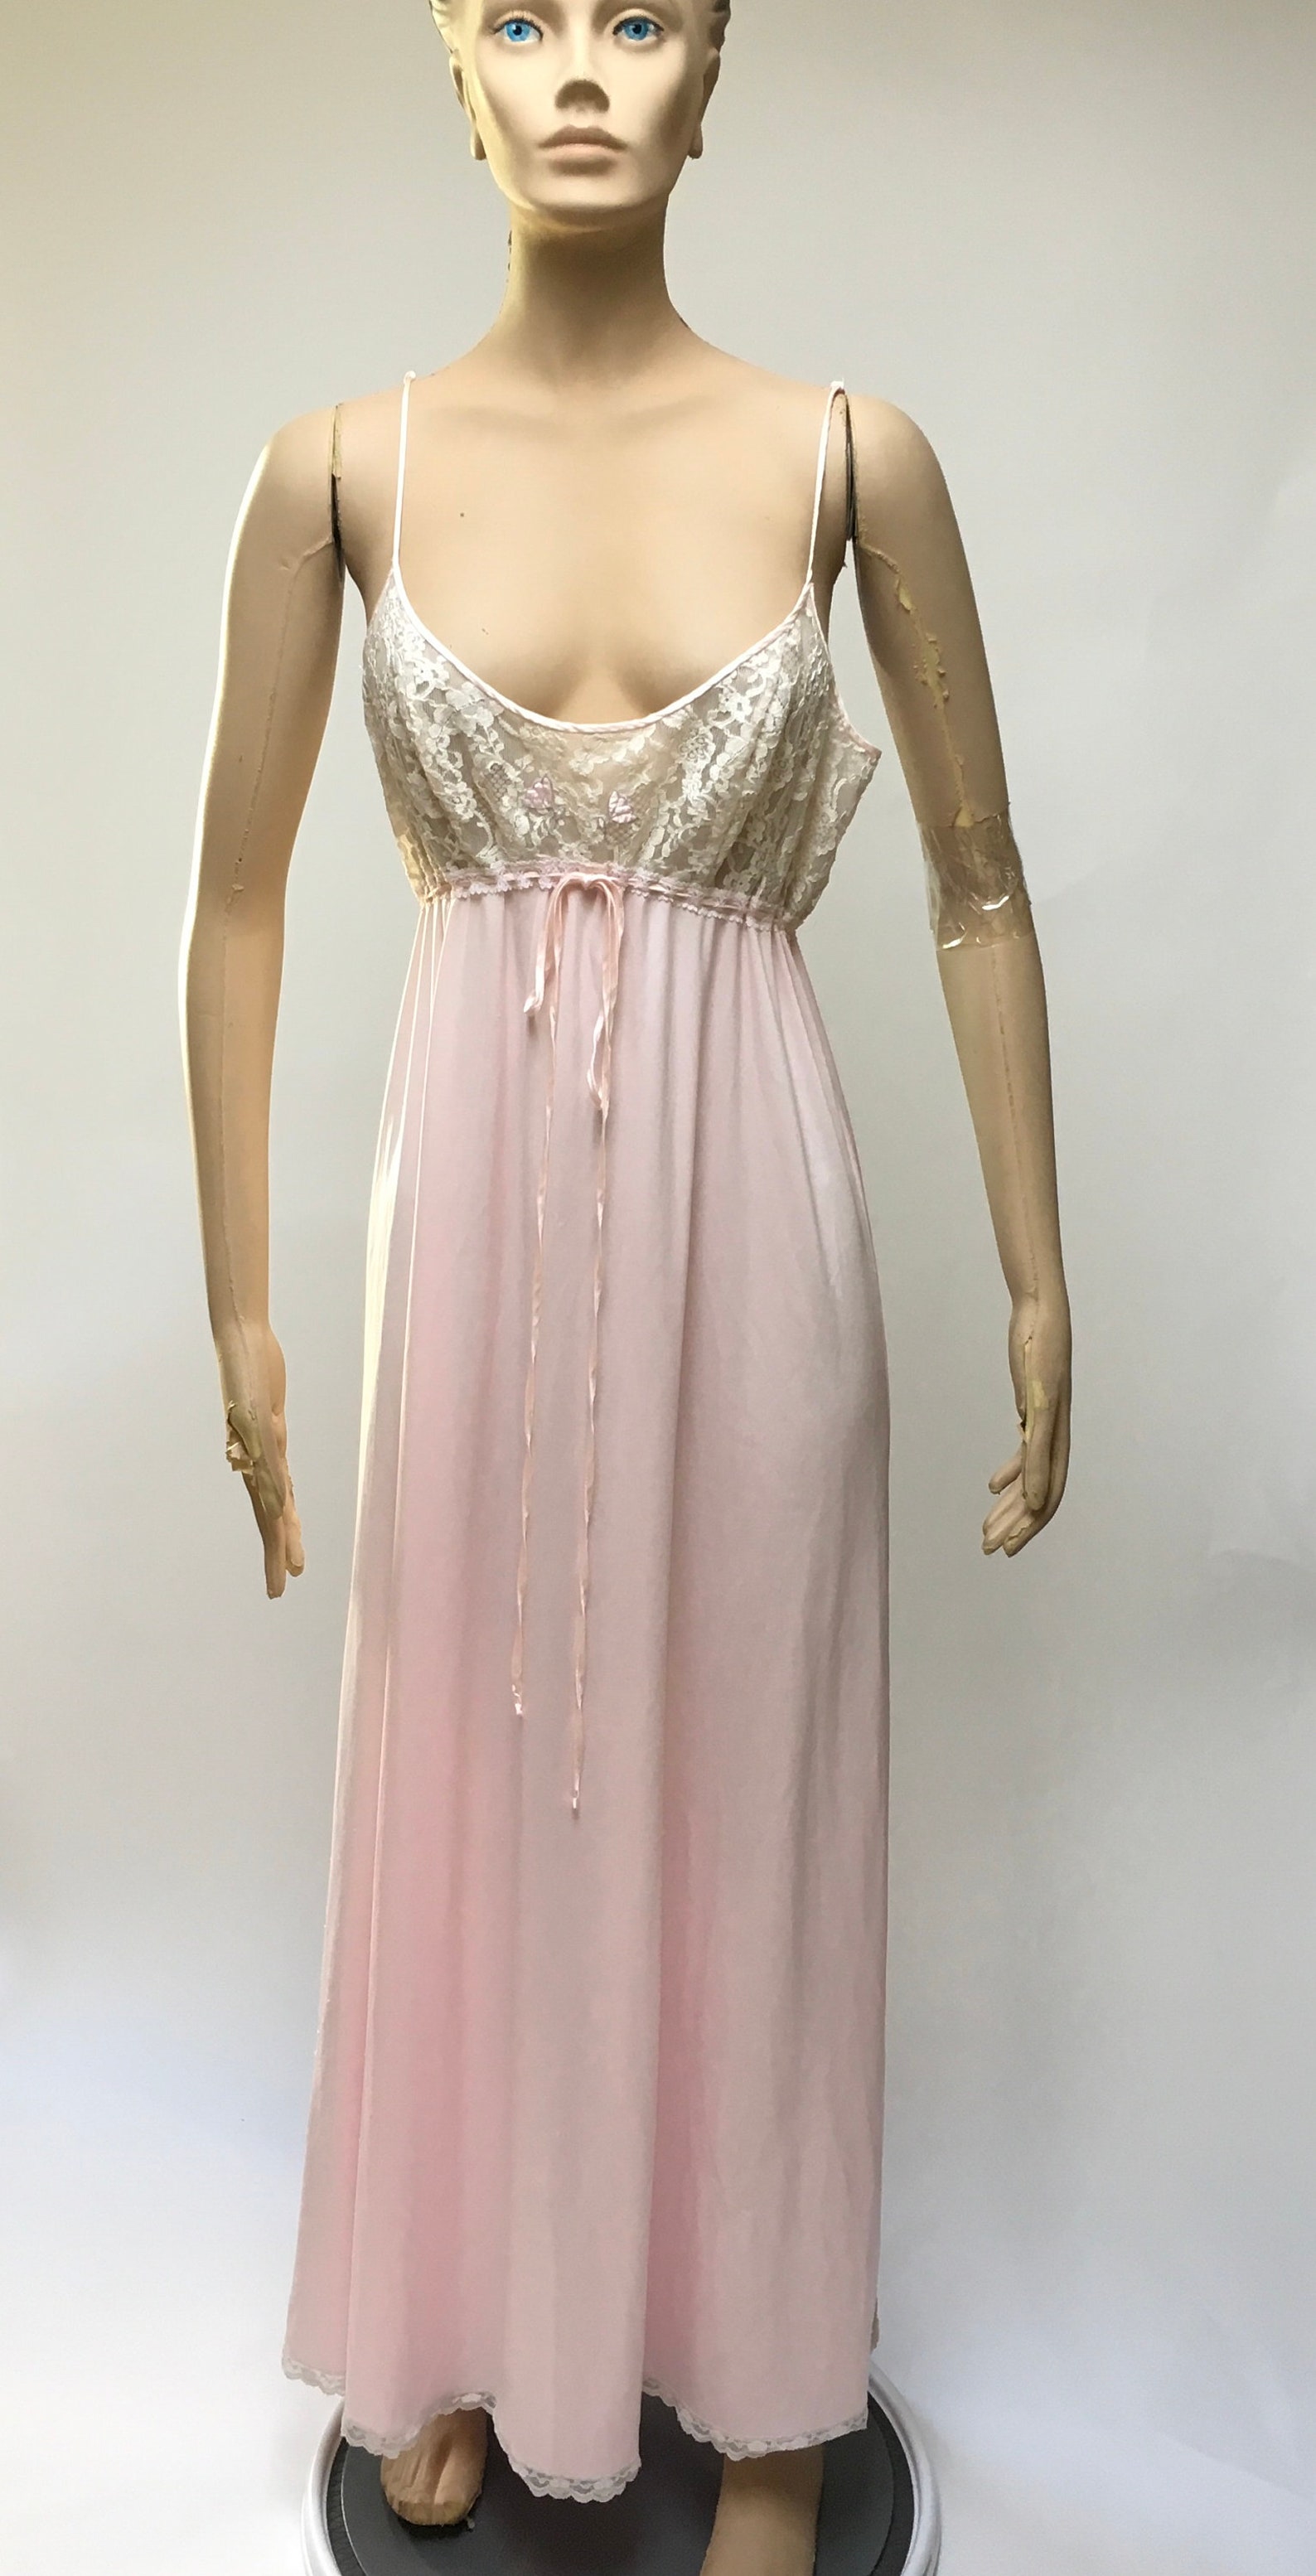 Lucie Ann Claire Sandra Pink Nightgown Robe Set Peignoir - Etsy